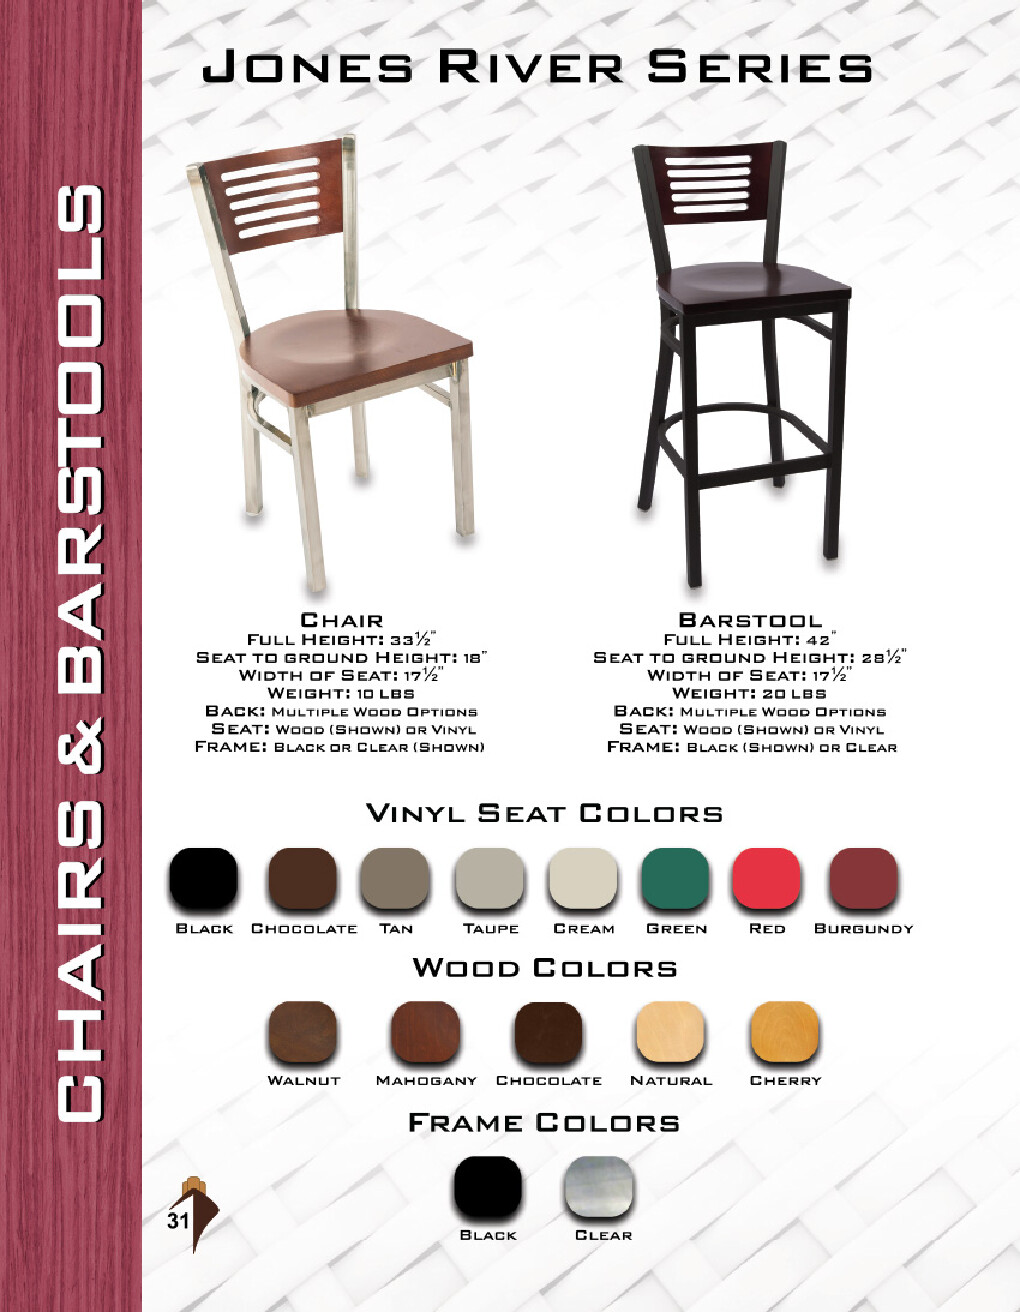 JMC Furniture JONES RIVER CLEAR COAT CHAIR WOOD Indoor Side Chair